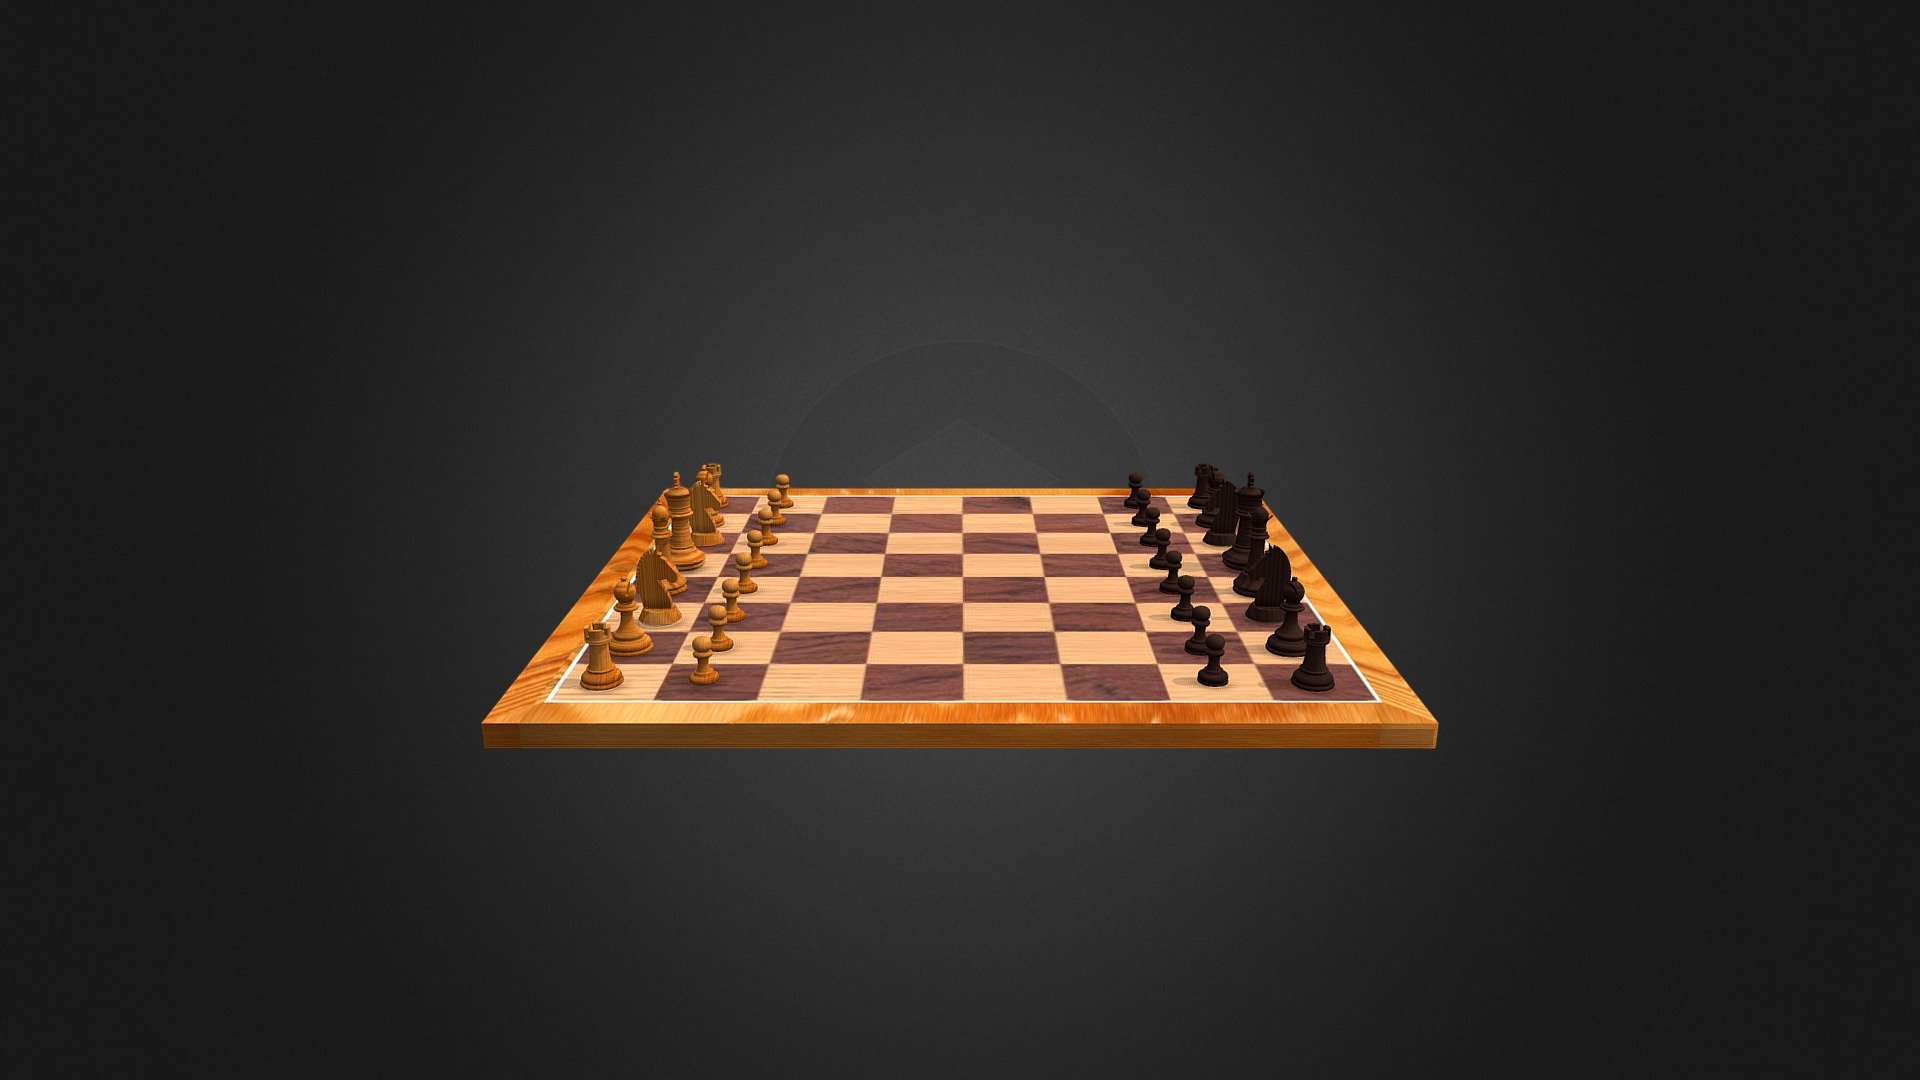 3D Chess(by Serch111)